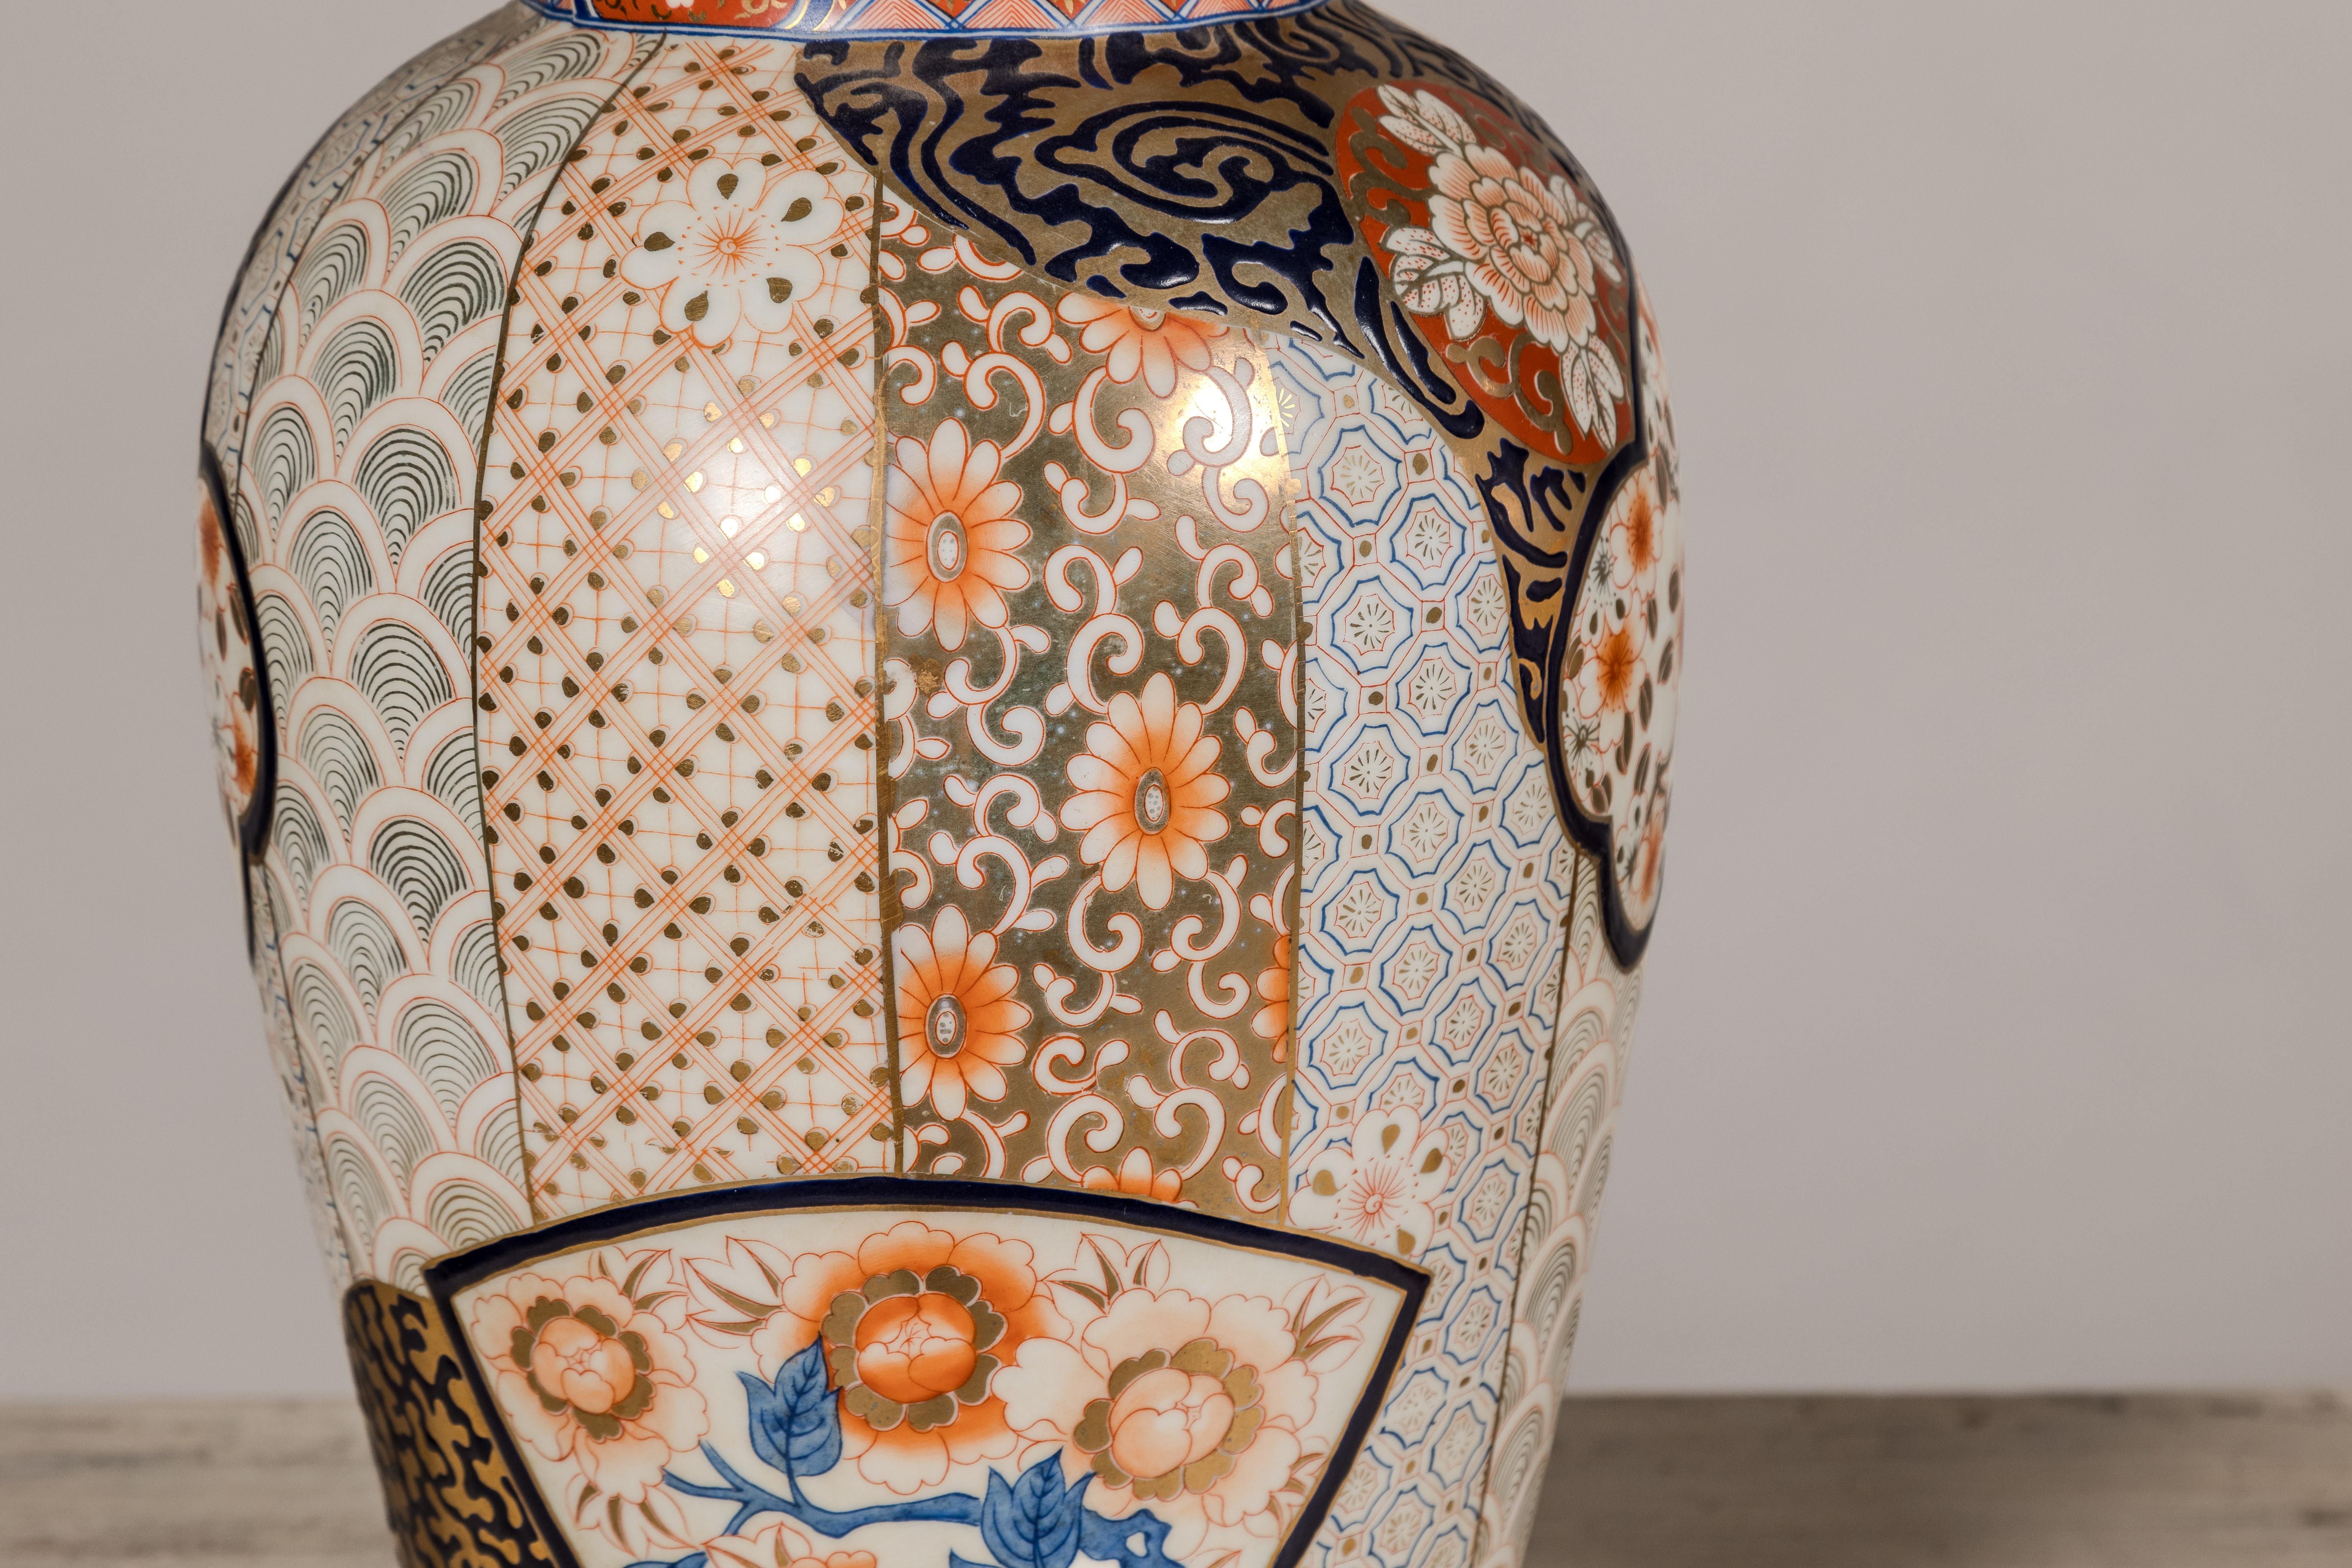 Porcelain Arita Japanese Style Lidded Jars with Gold, Blue and Orange Floral Motifs For Sale